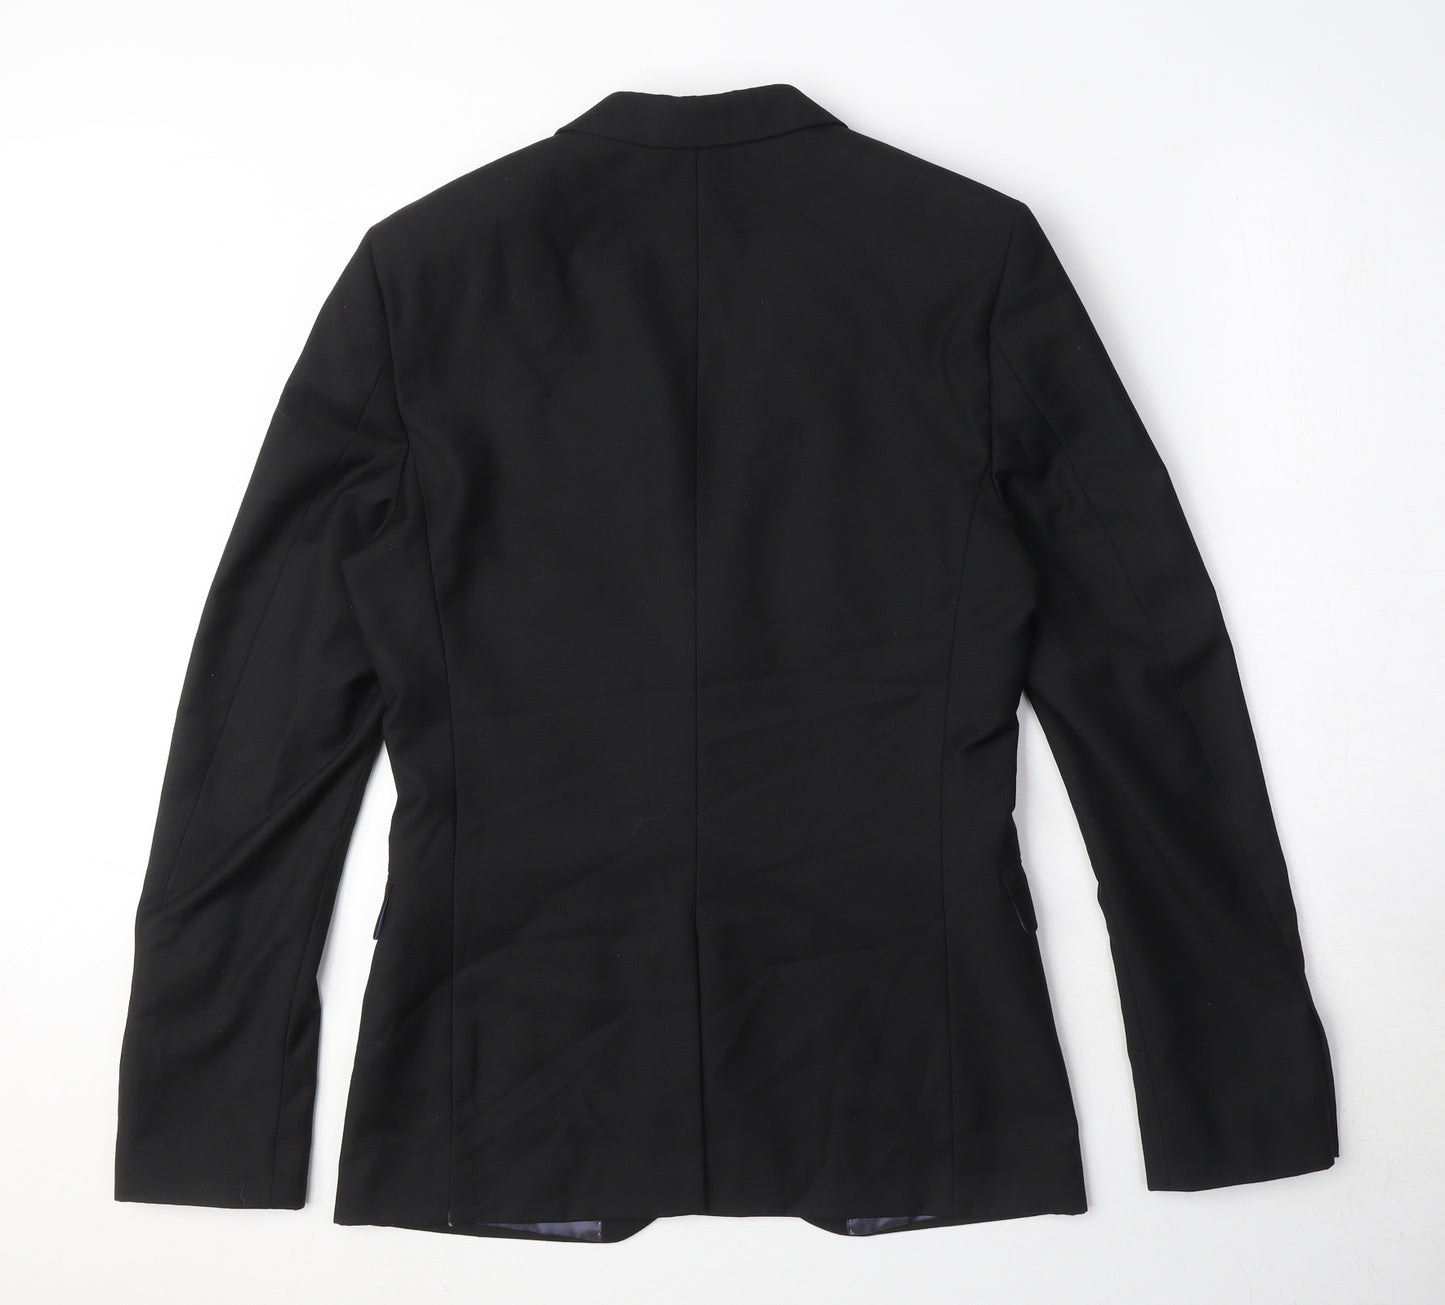 Topman Mens Black Polyester Jacket Suit Jacket Size S Regular